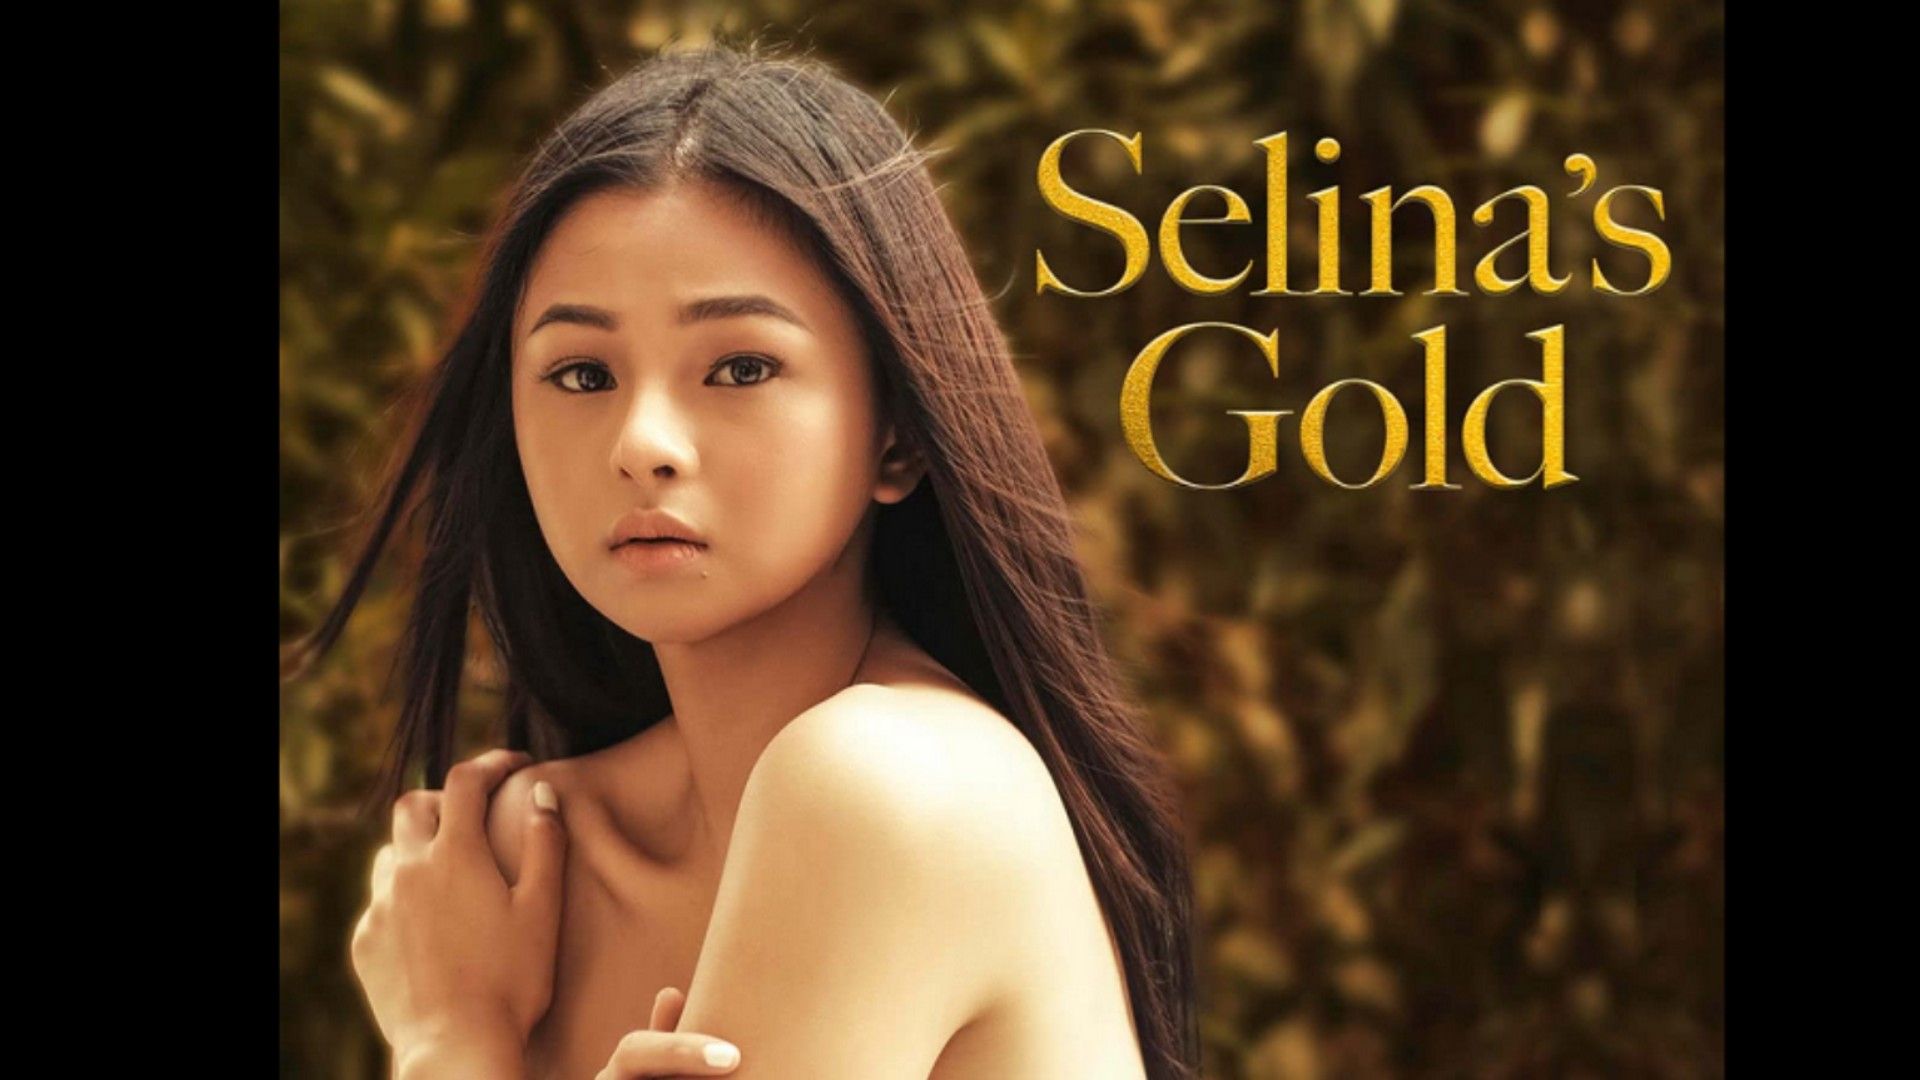 Selina's gold